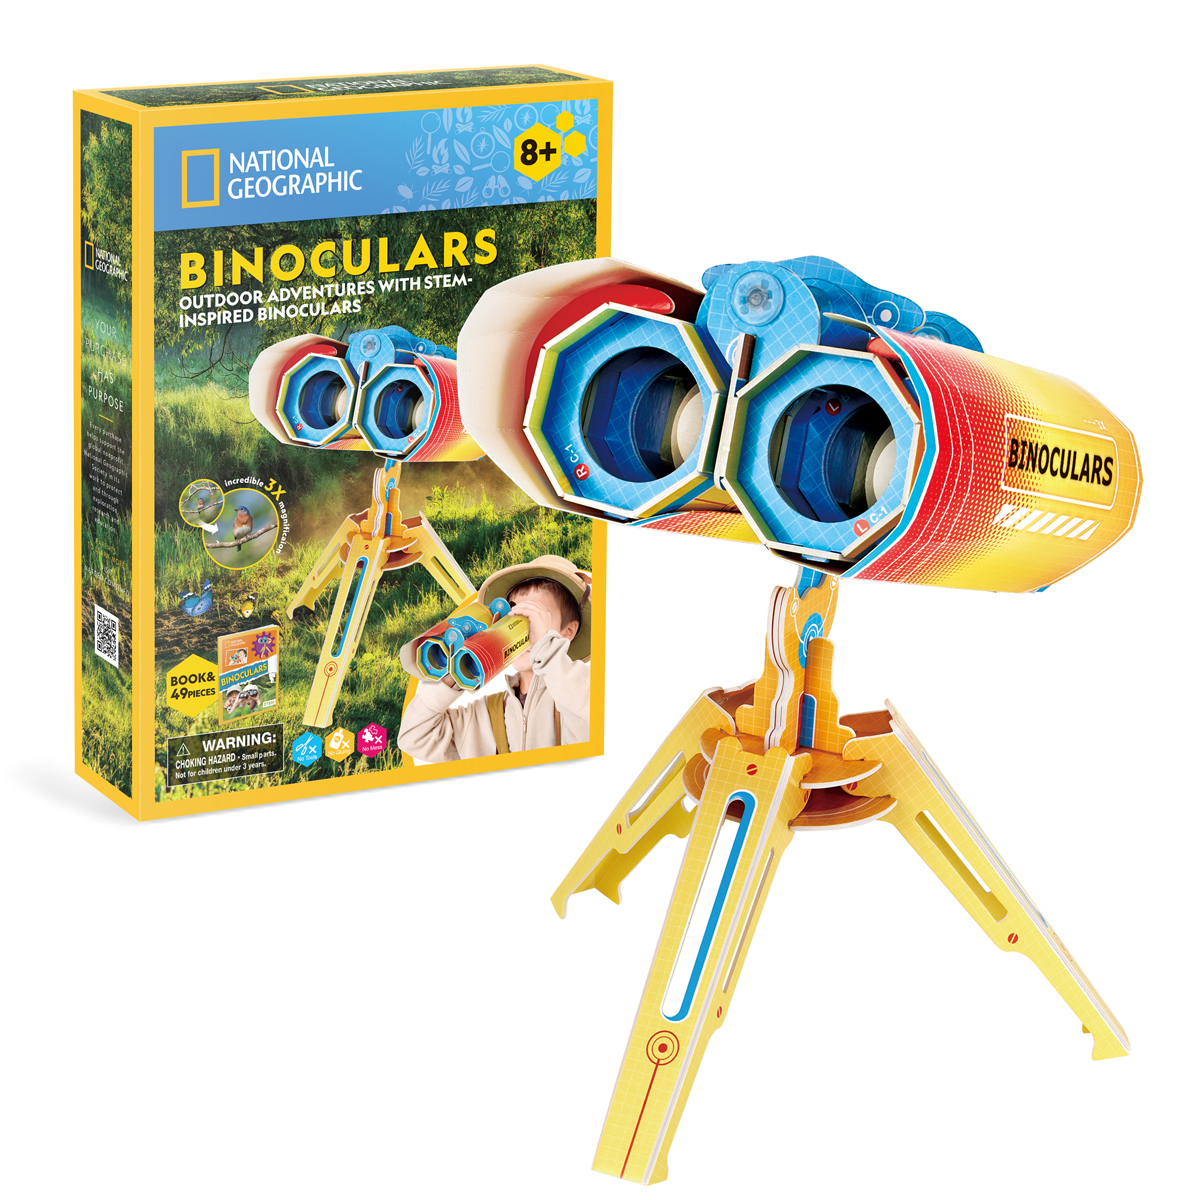 Binoculars 雙筒望遠鏡